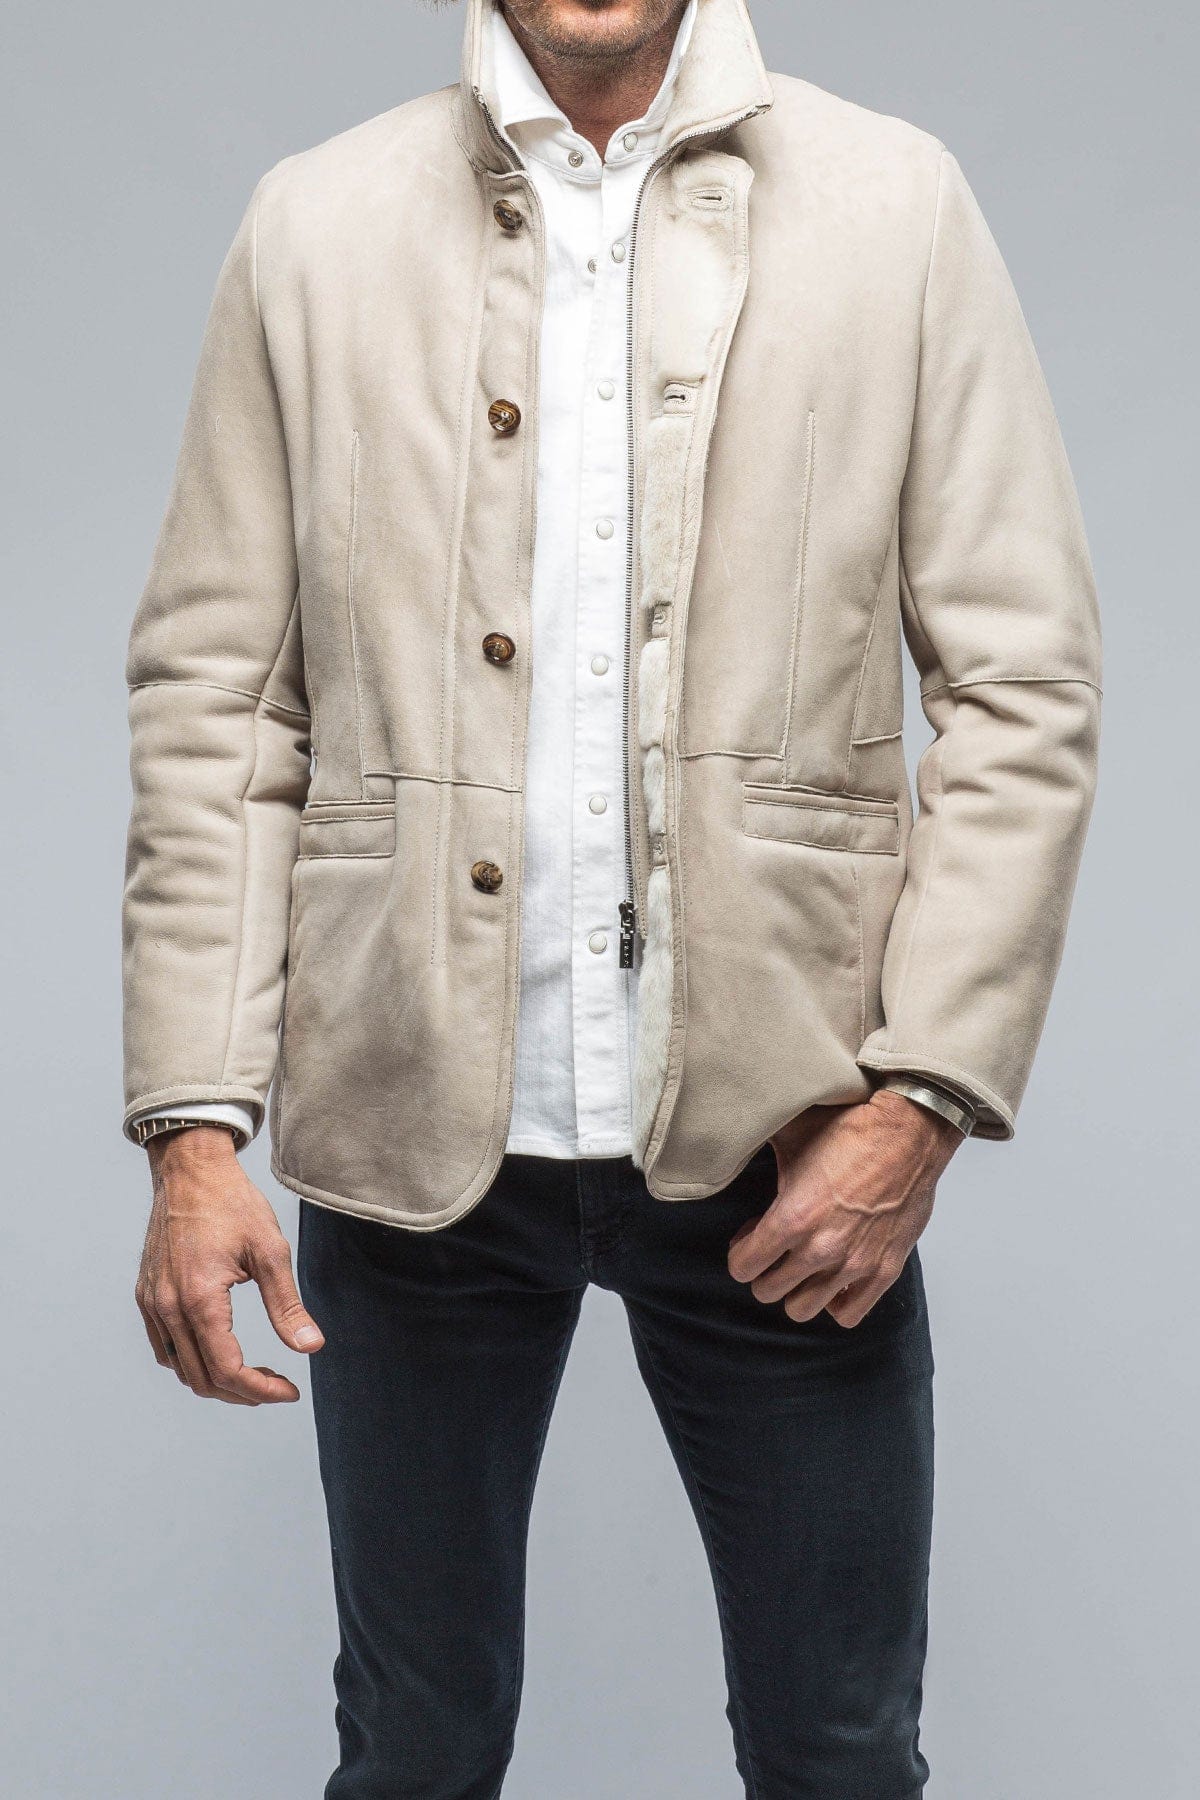 Antonio Shearling Jacket in Light Sand - AXEL'S